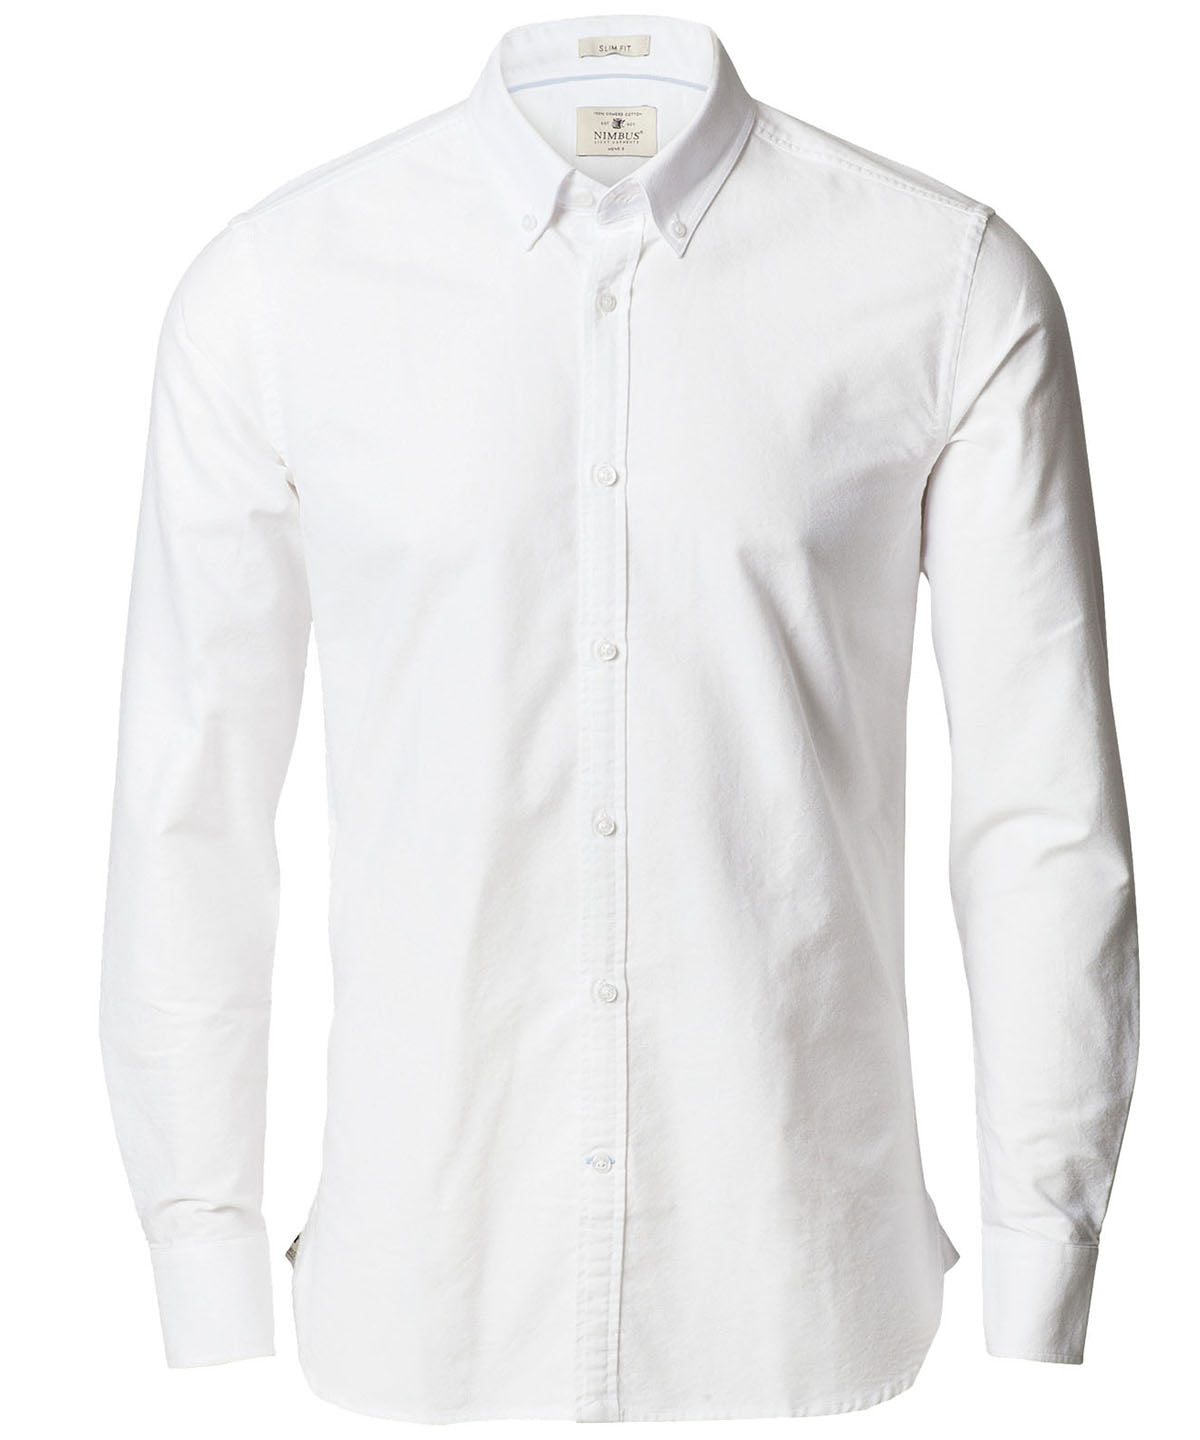 Bolir - Rochester Slim Fit – Classic Oxford Shirt